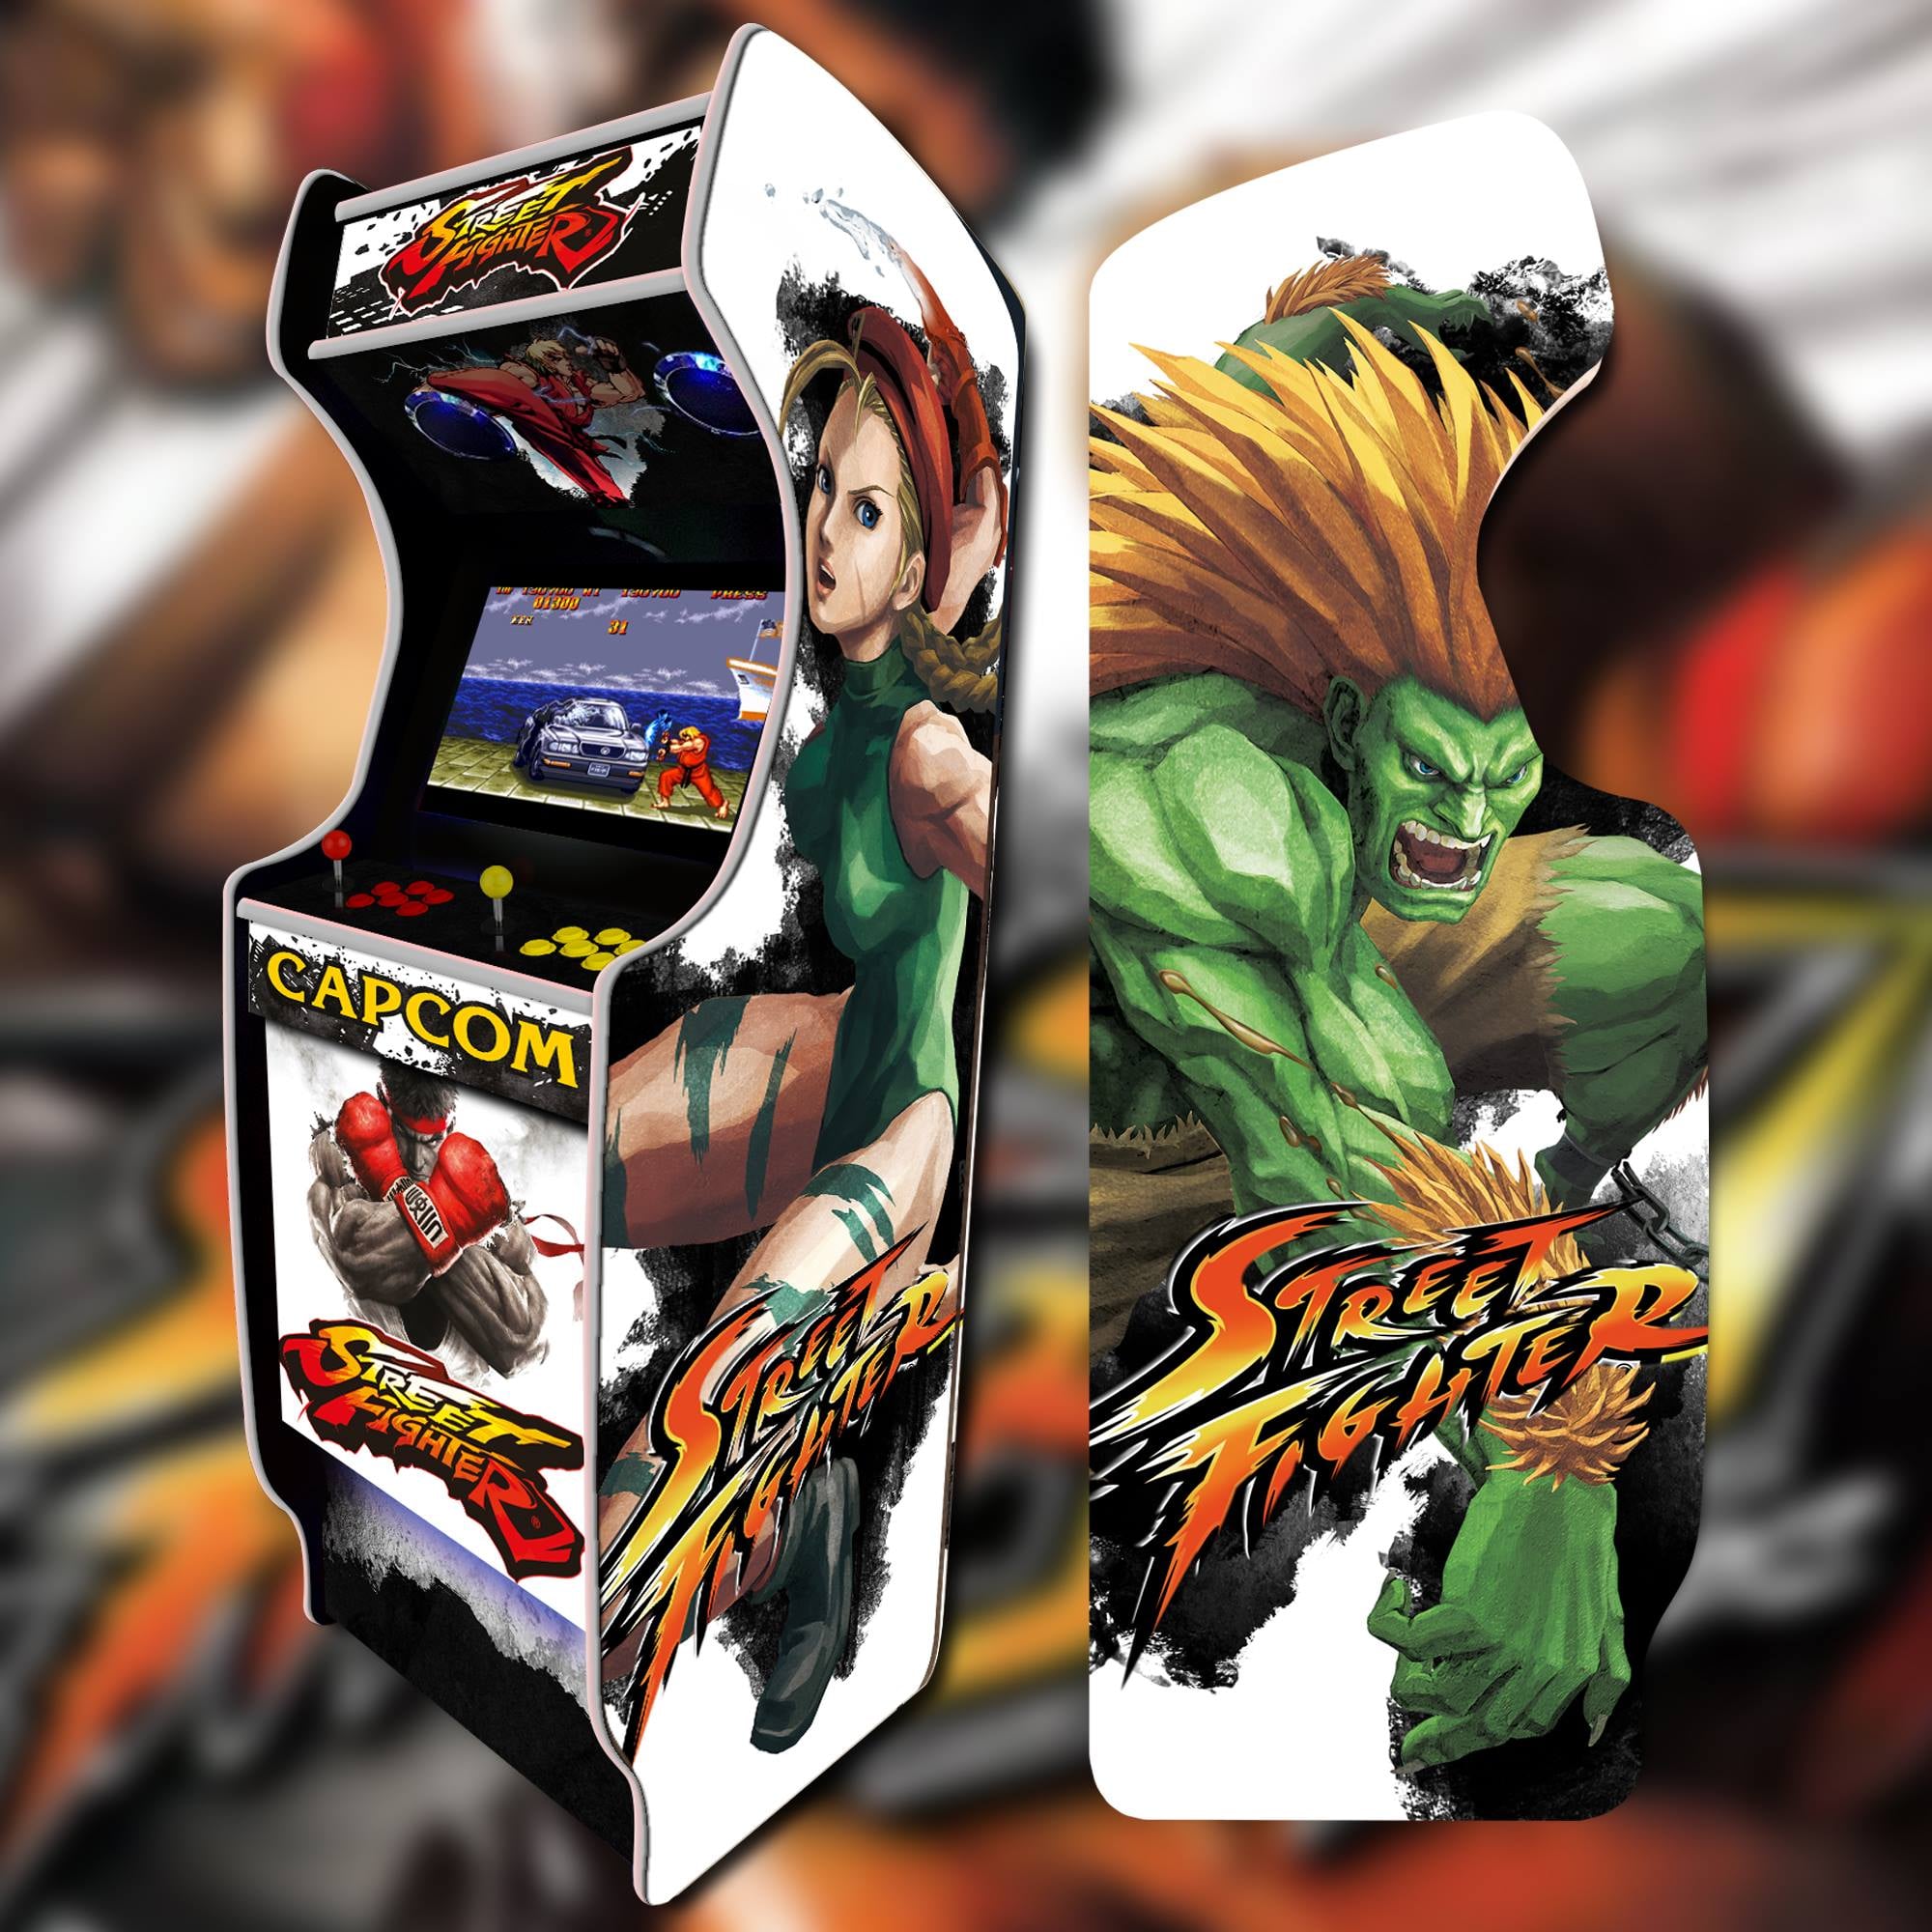 borne daracade Street Fighter esil game.fr  1 - Location Borne arcade Marvel 2800 jeux